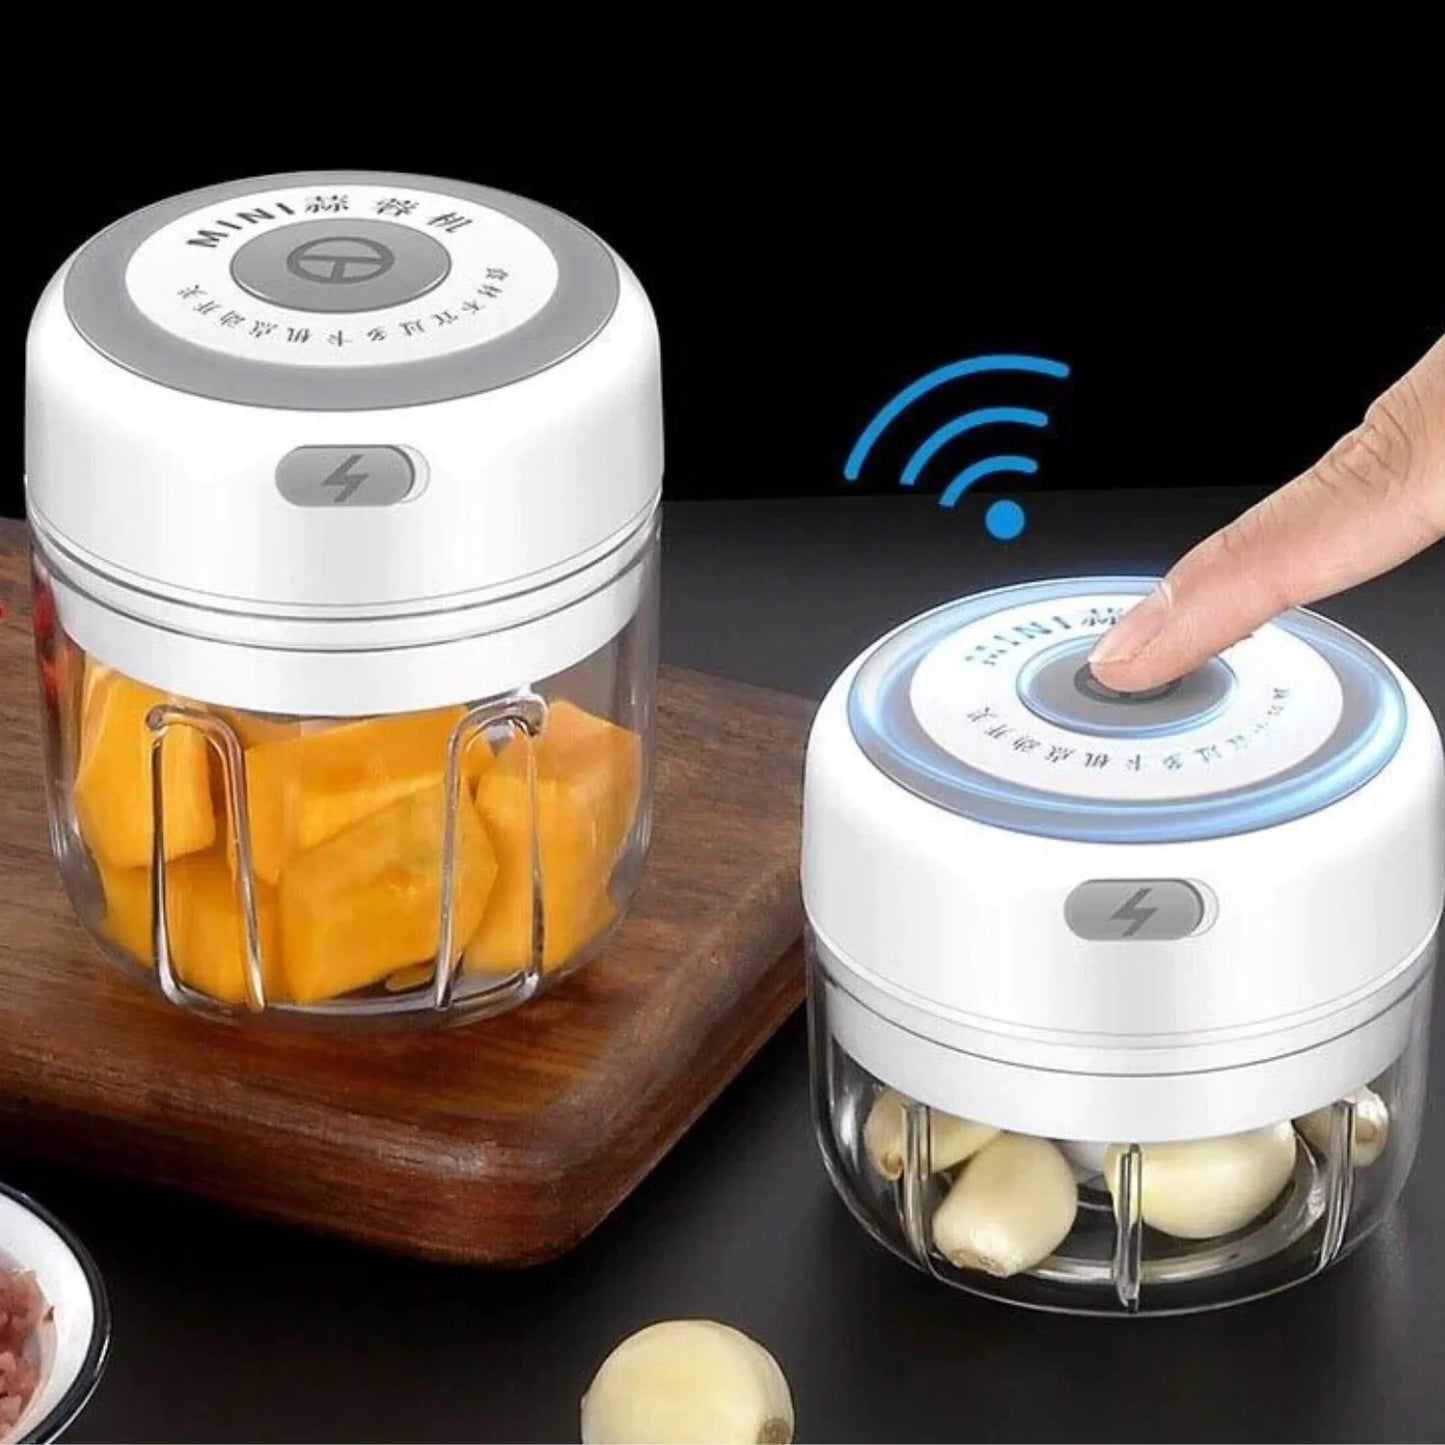 QuickChop Portable Electric Food Processor